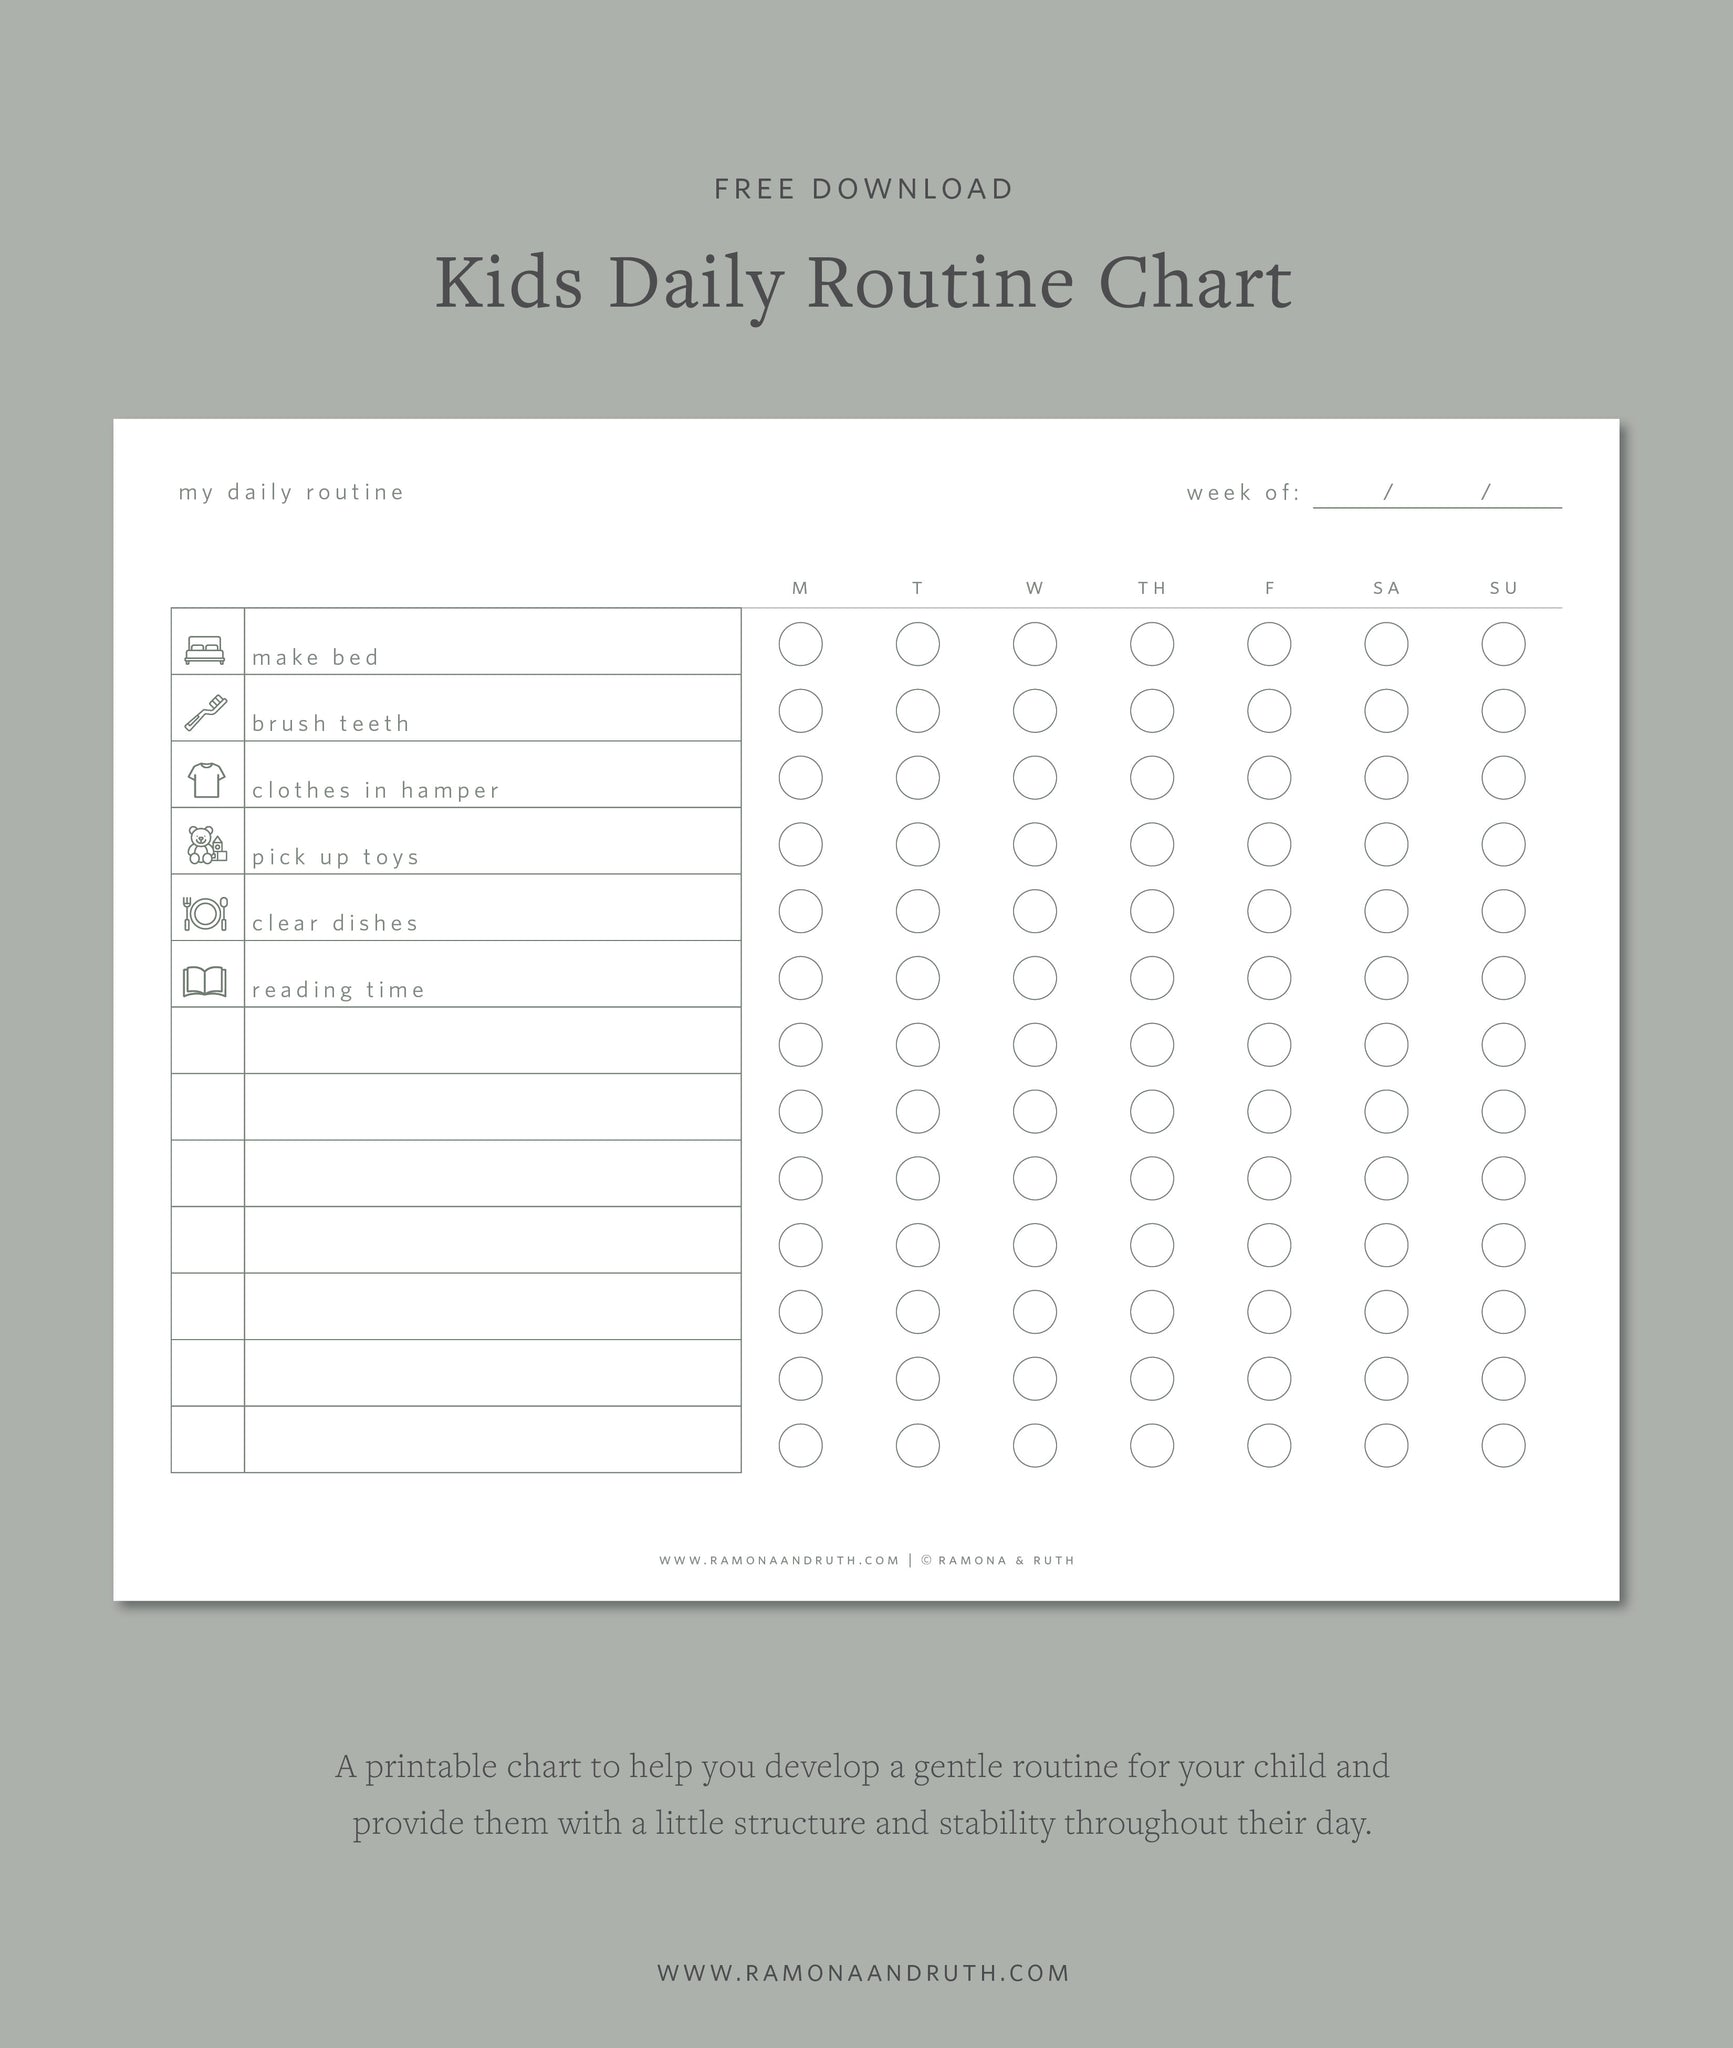 Kids Daily Routine Chart Free Printable by Ramona & Ruth